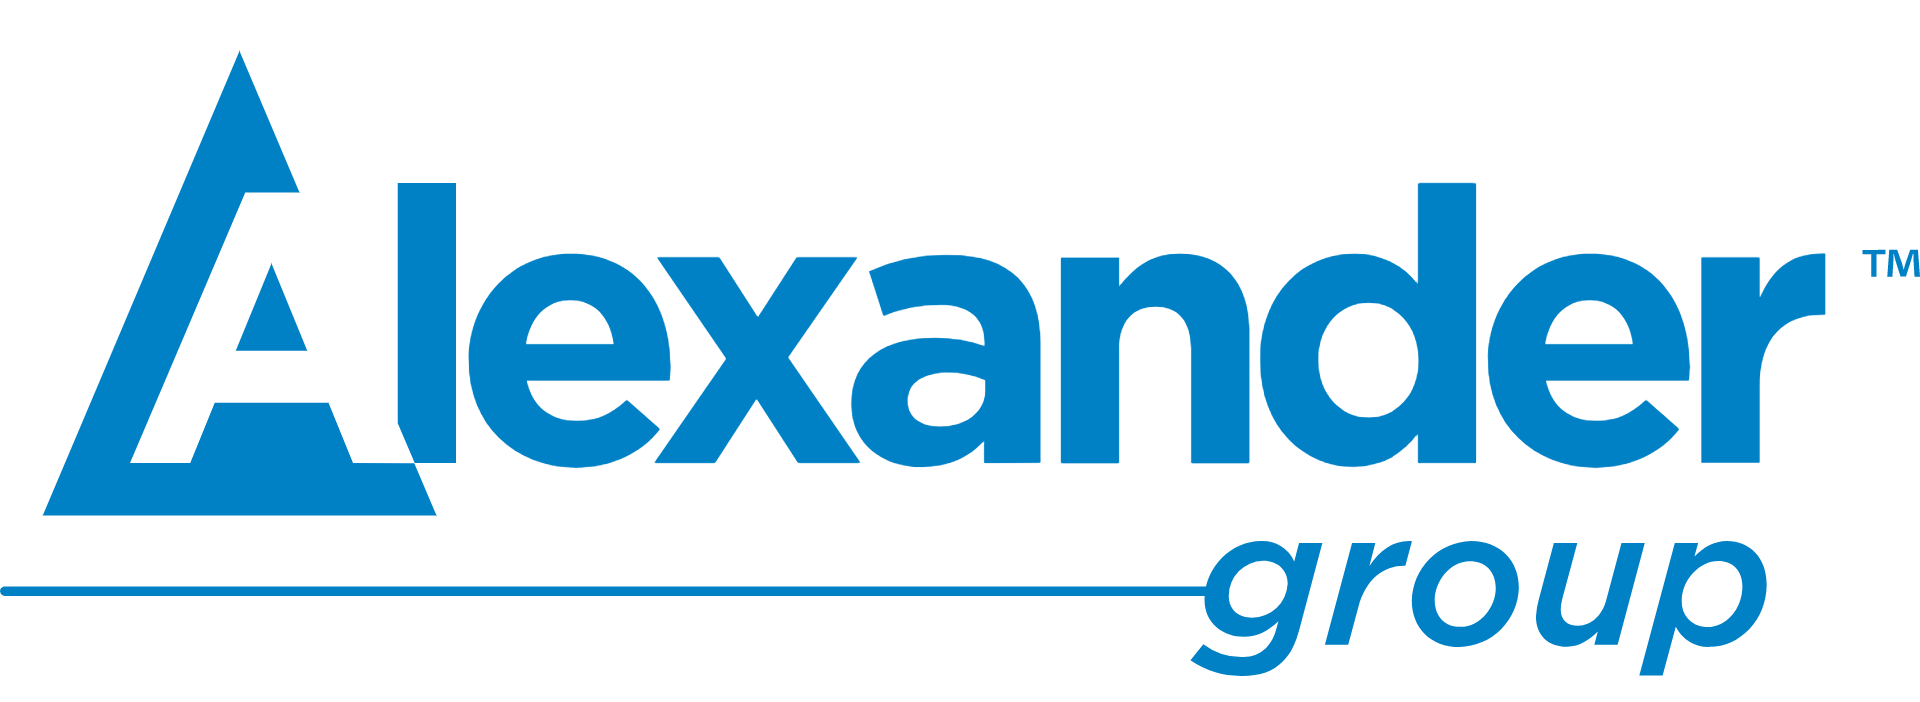 alexander-group-logo